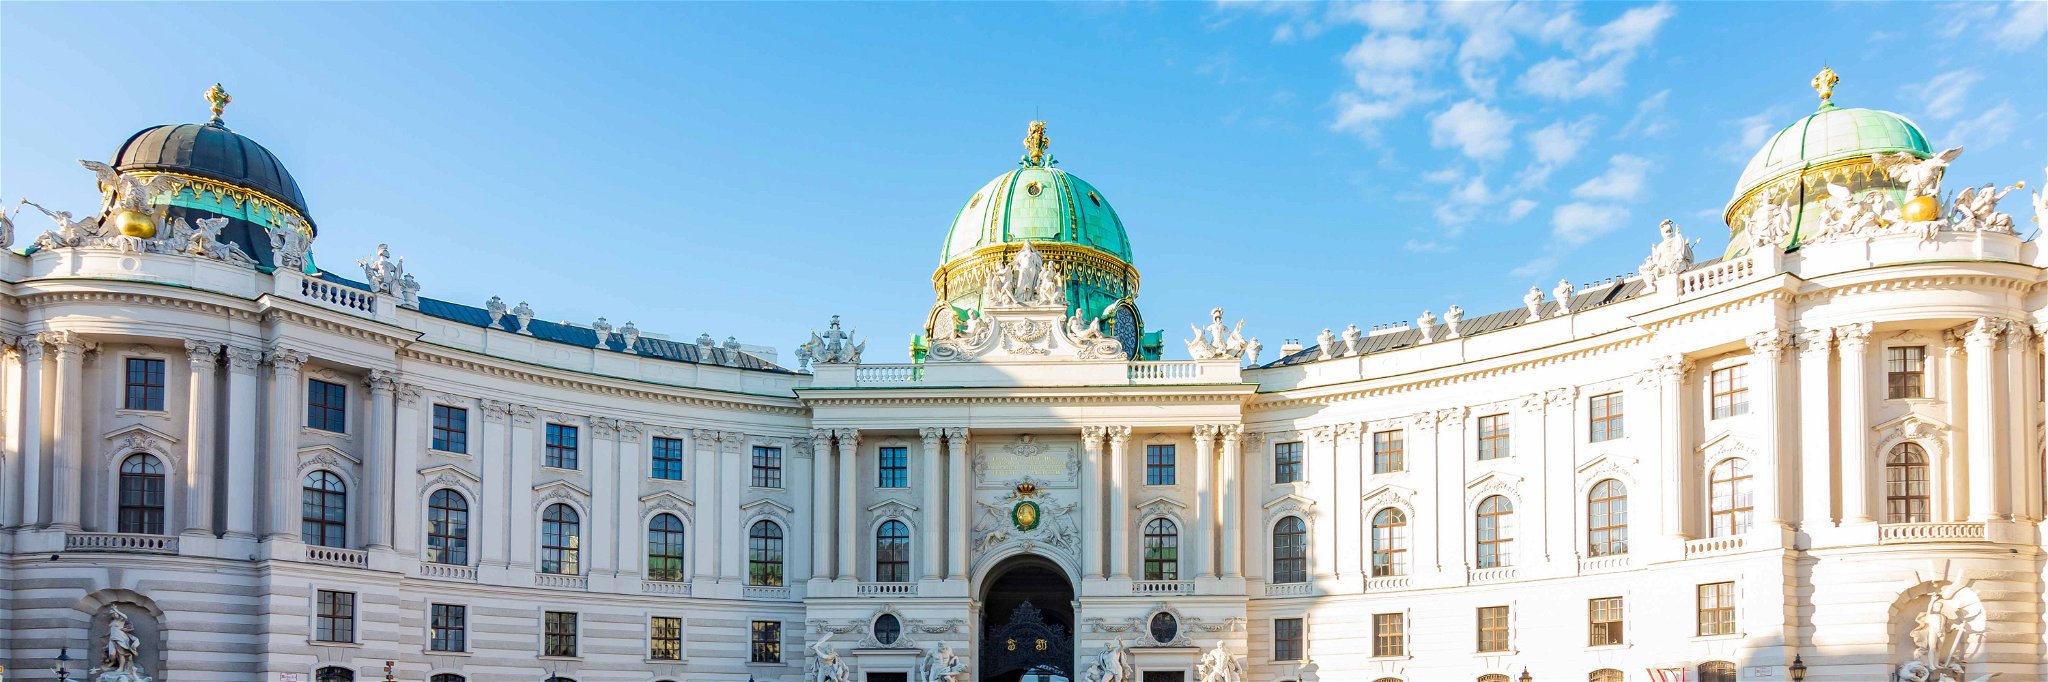 Austria's most popular palace: The Hofburg Palace